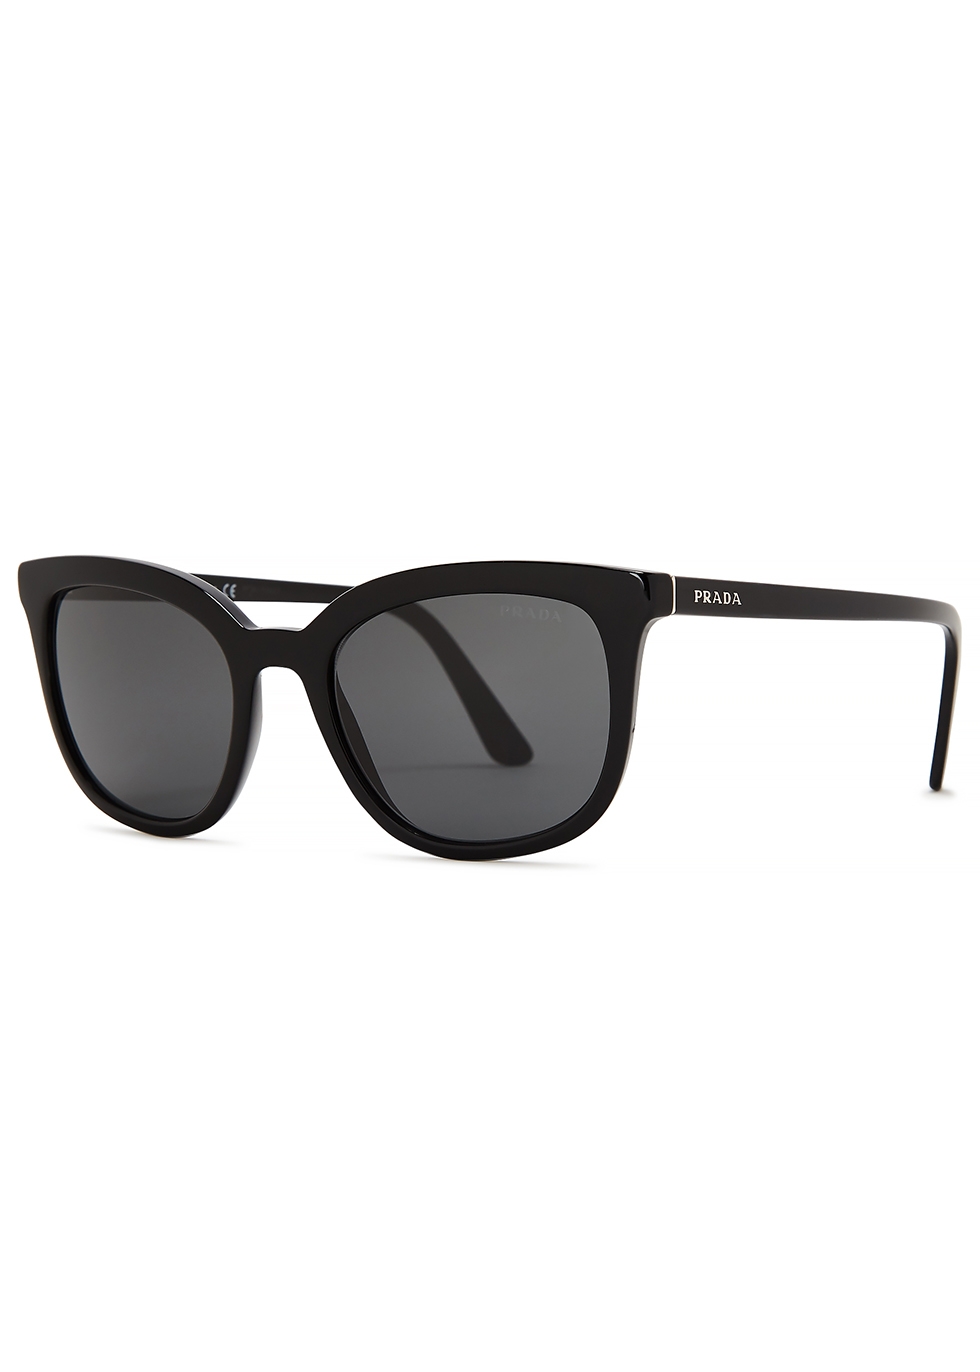 black wayfarer style sunglasses